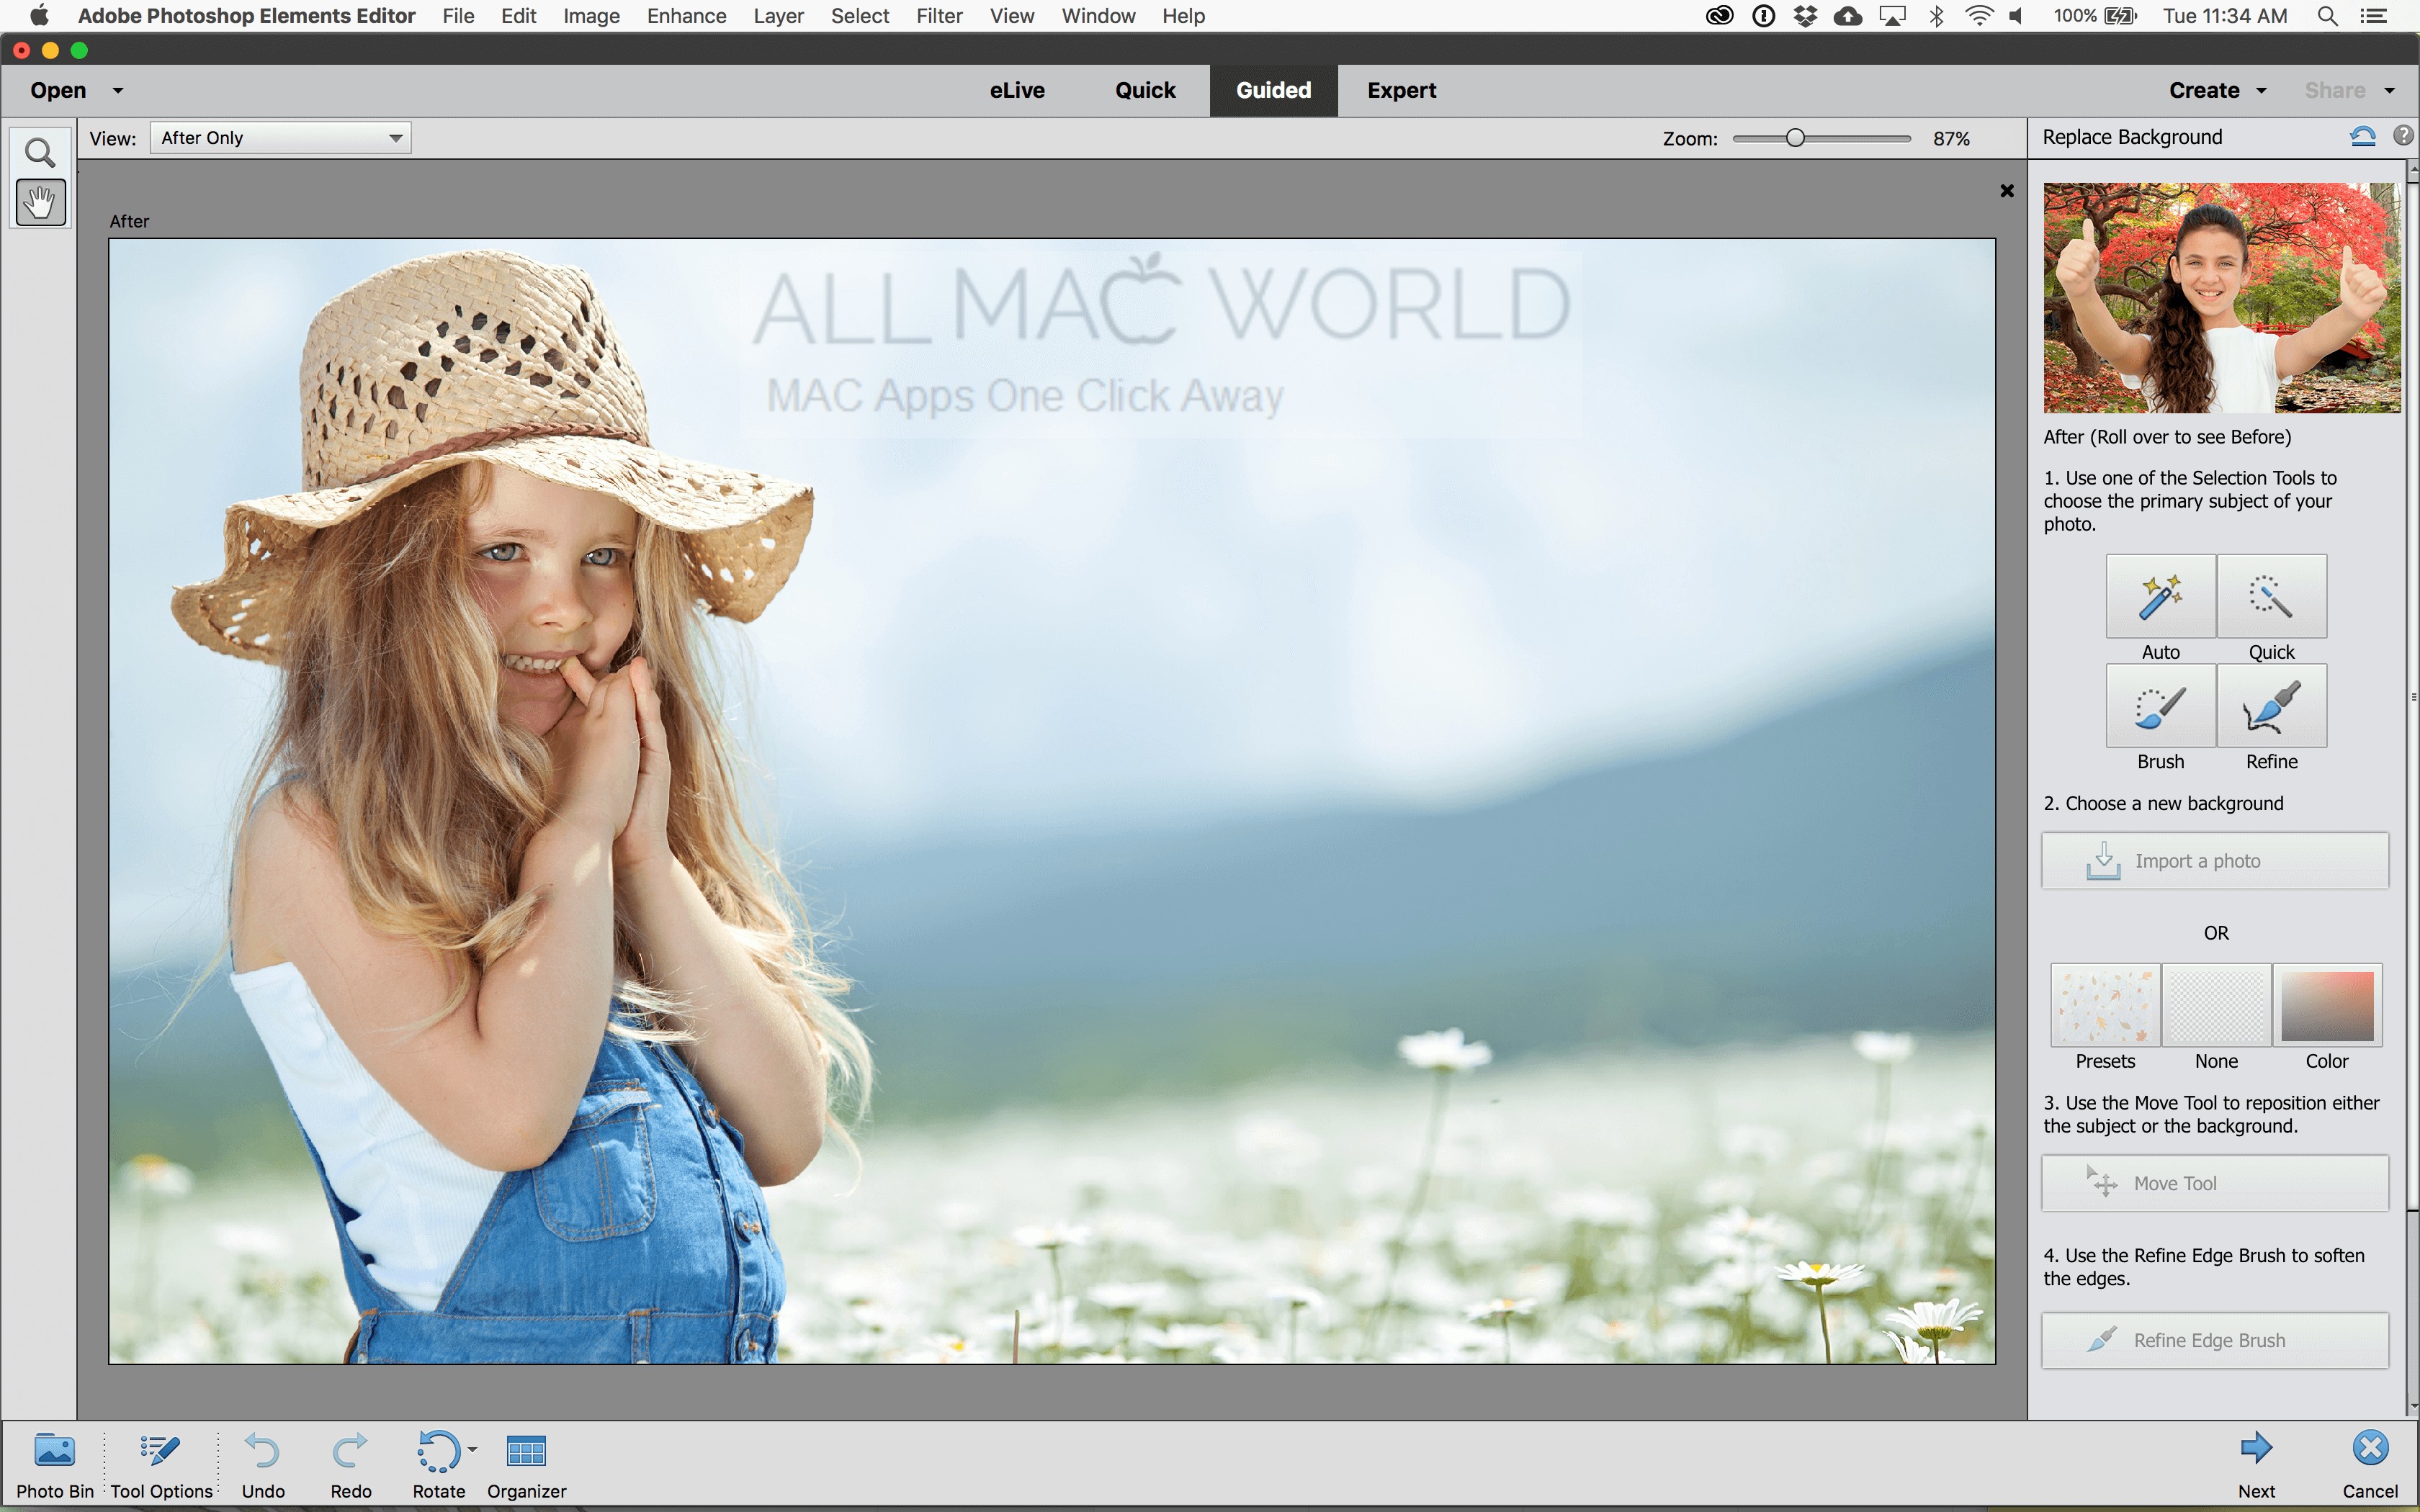 adobe photoshop elements 3.0 mac download